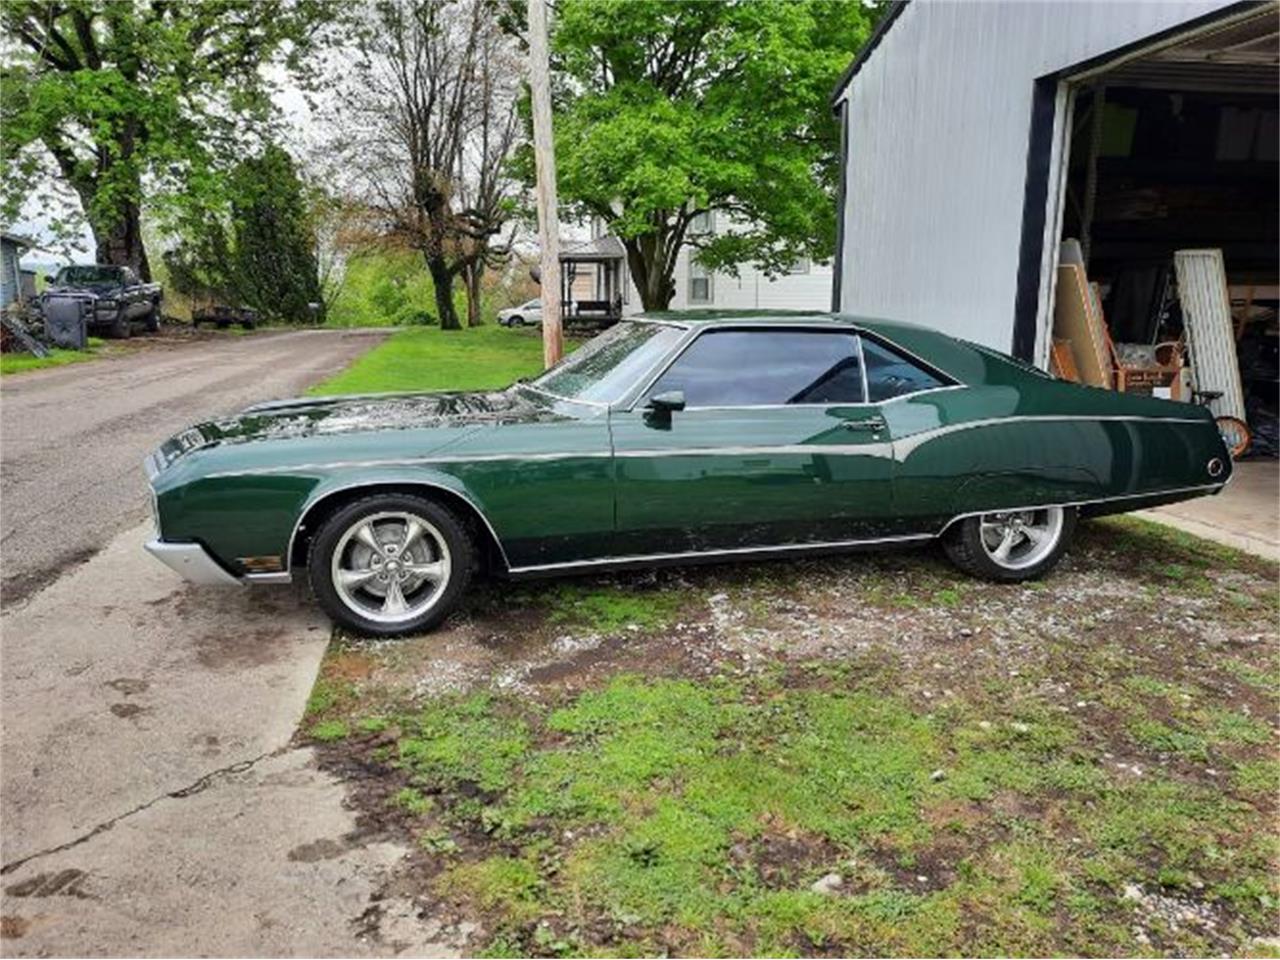 For Sale: 1970 Buick Riviera in Cadillac, Michigan for sale in Cadillac, MI